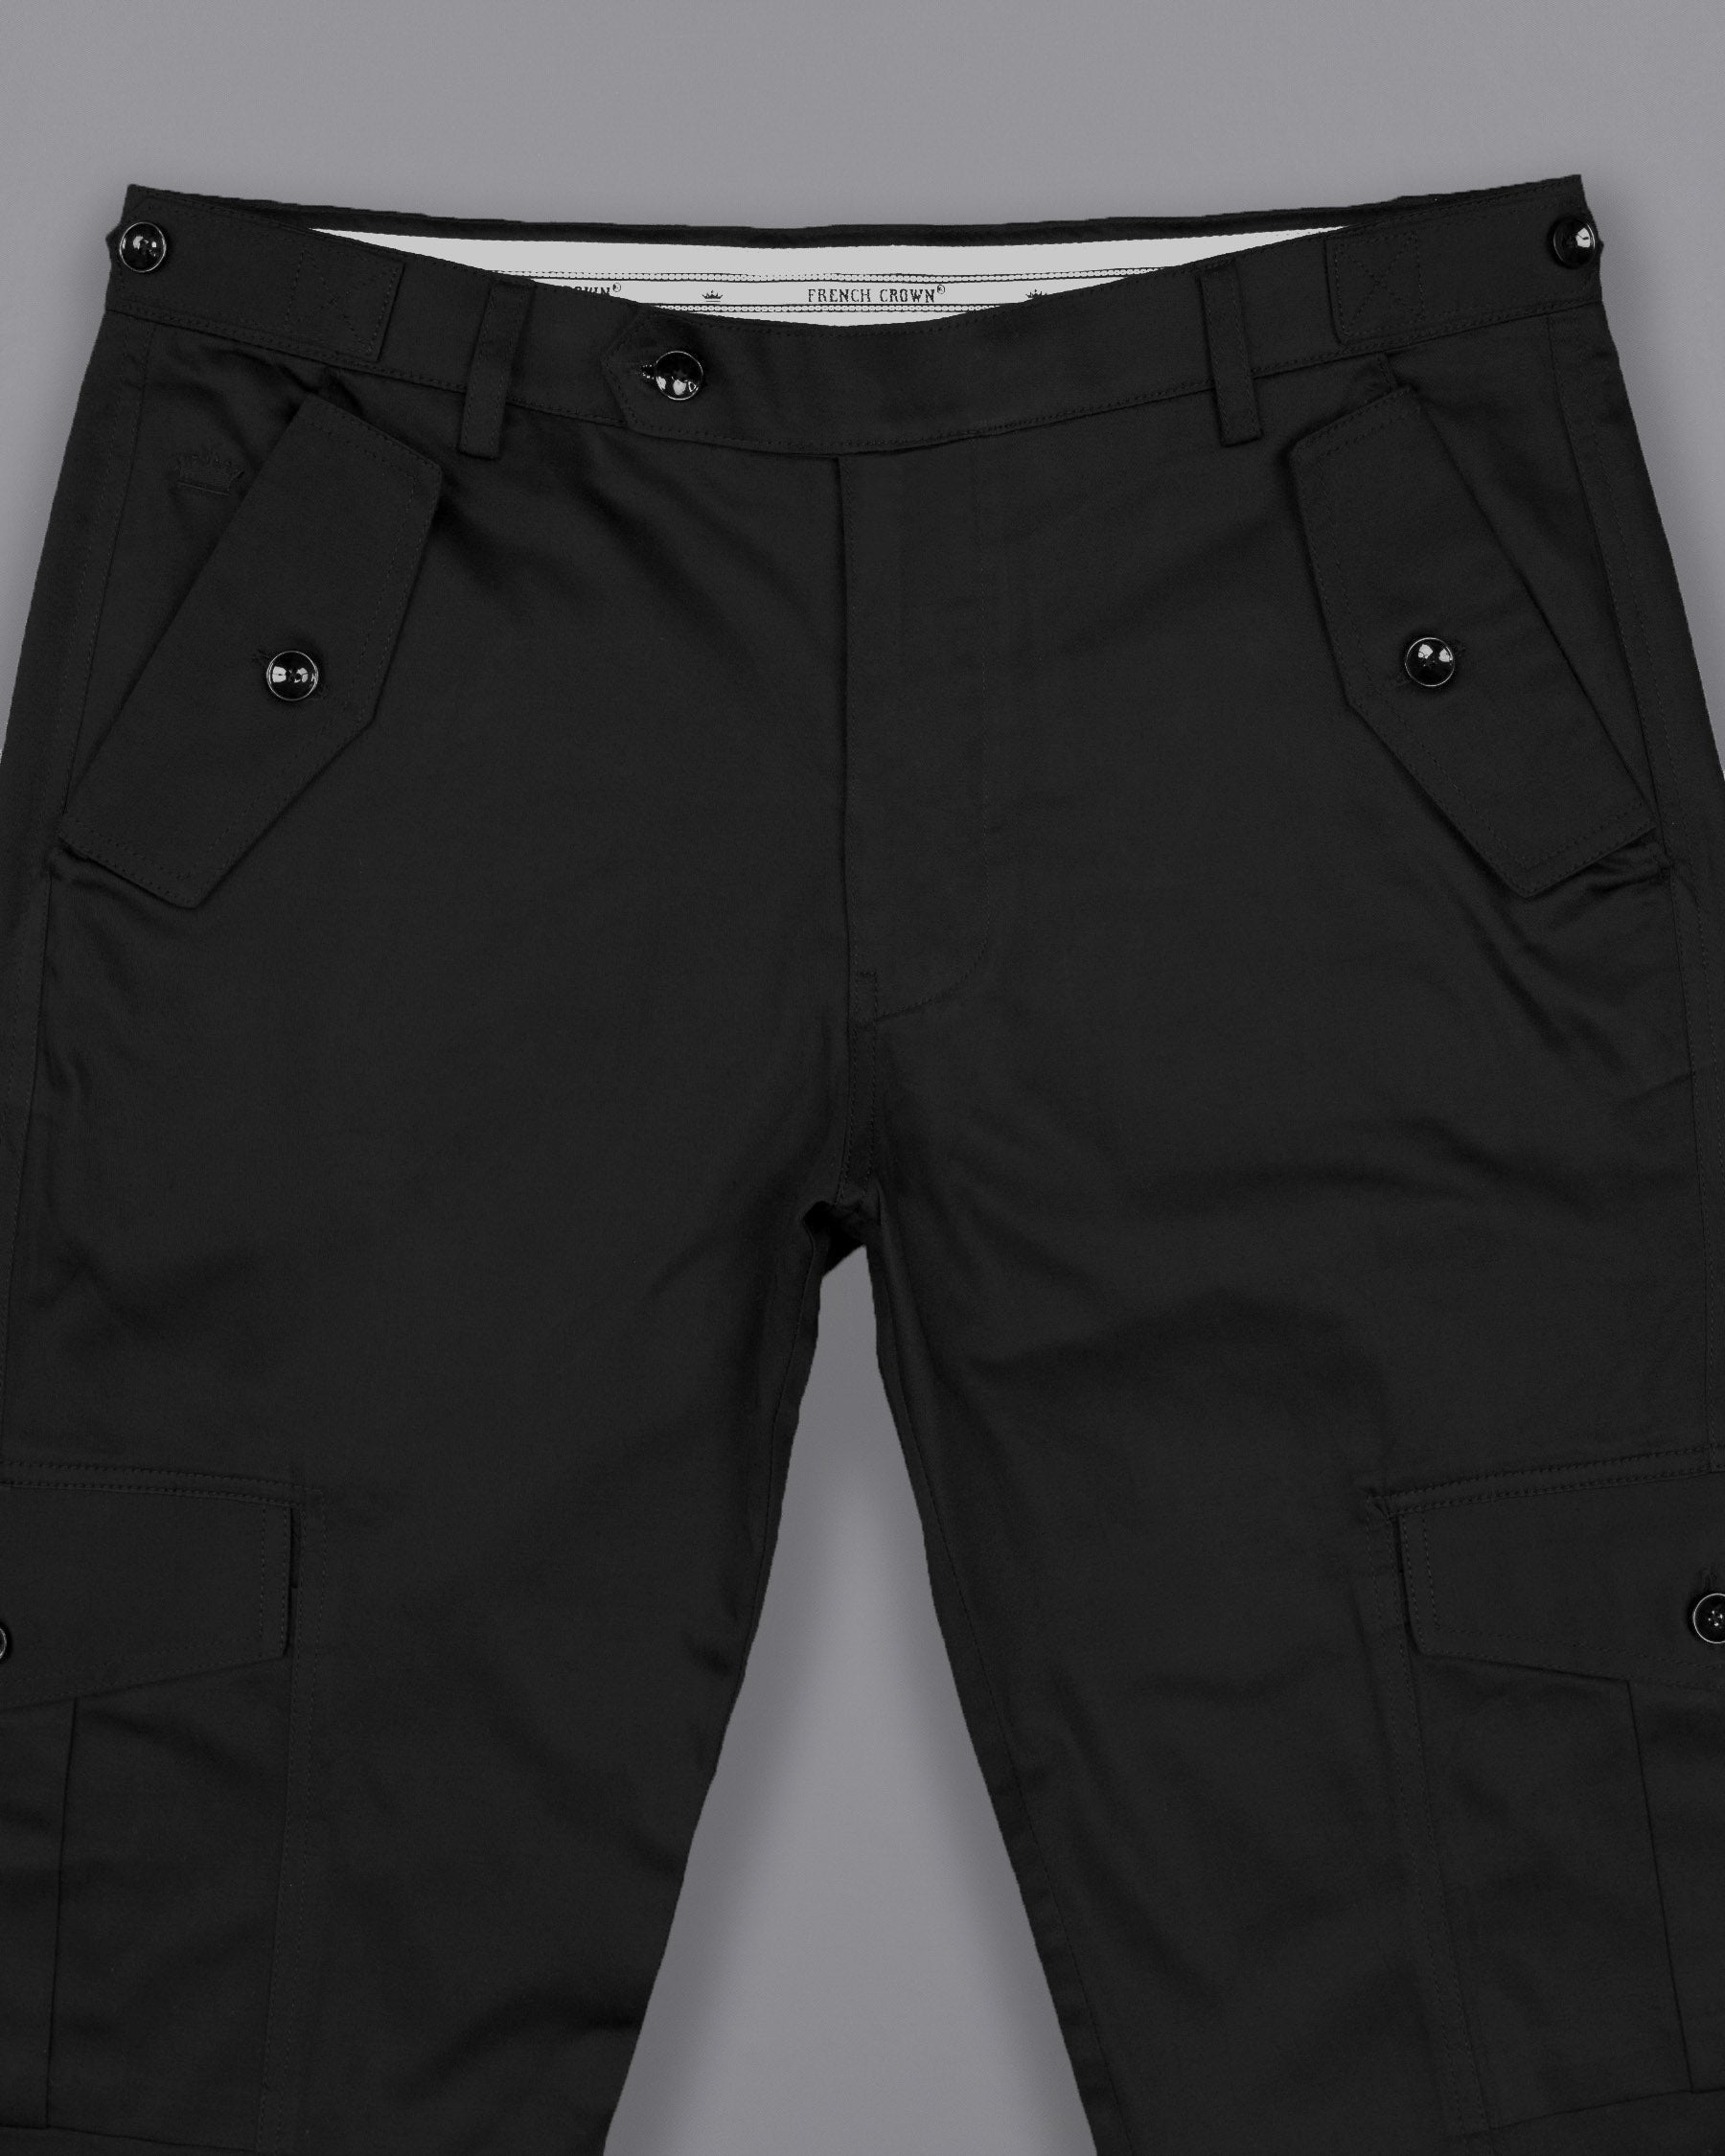 Amazing Multi-pocket cargo pants Size: Men's US 36/... - Depop